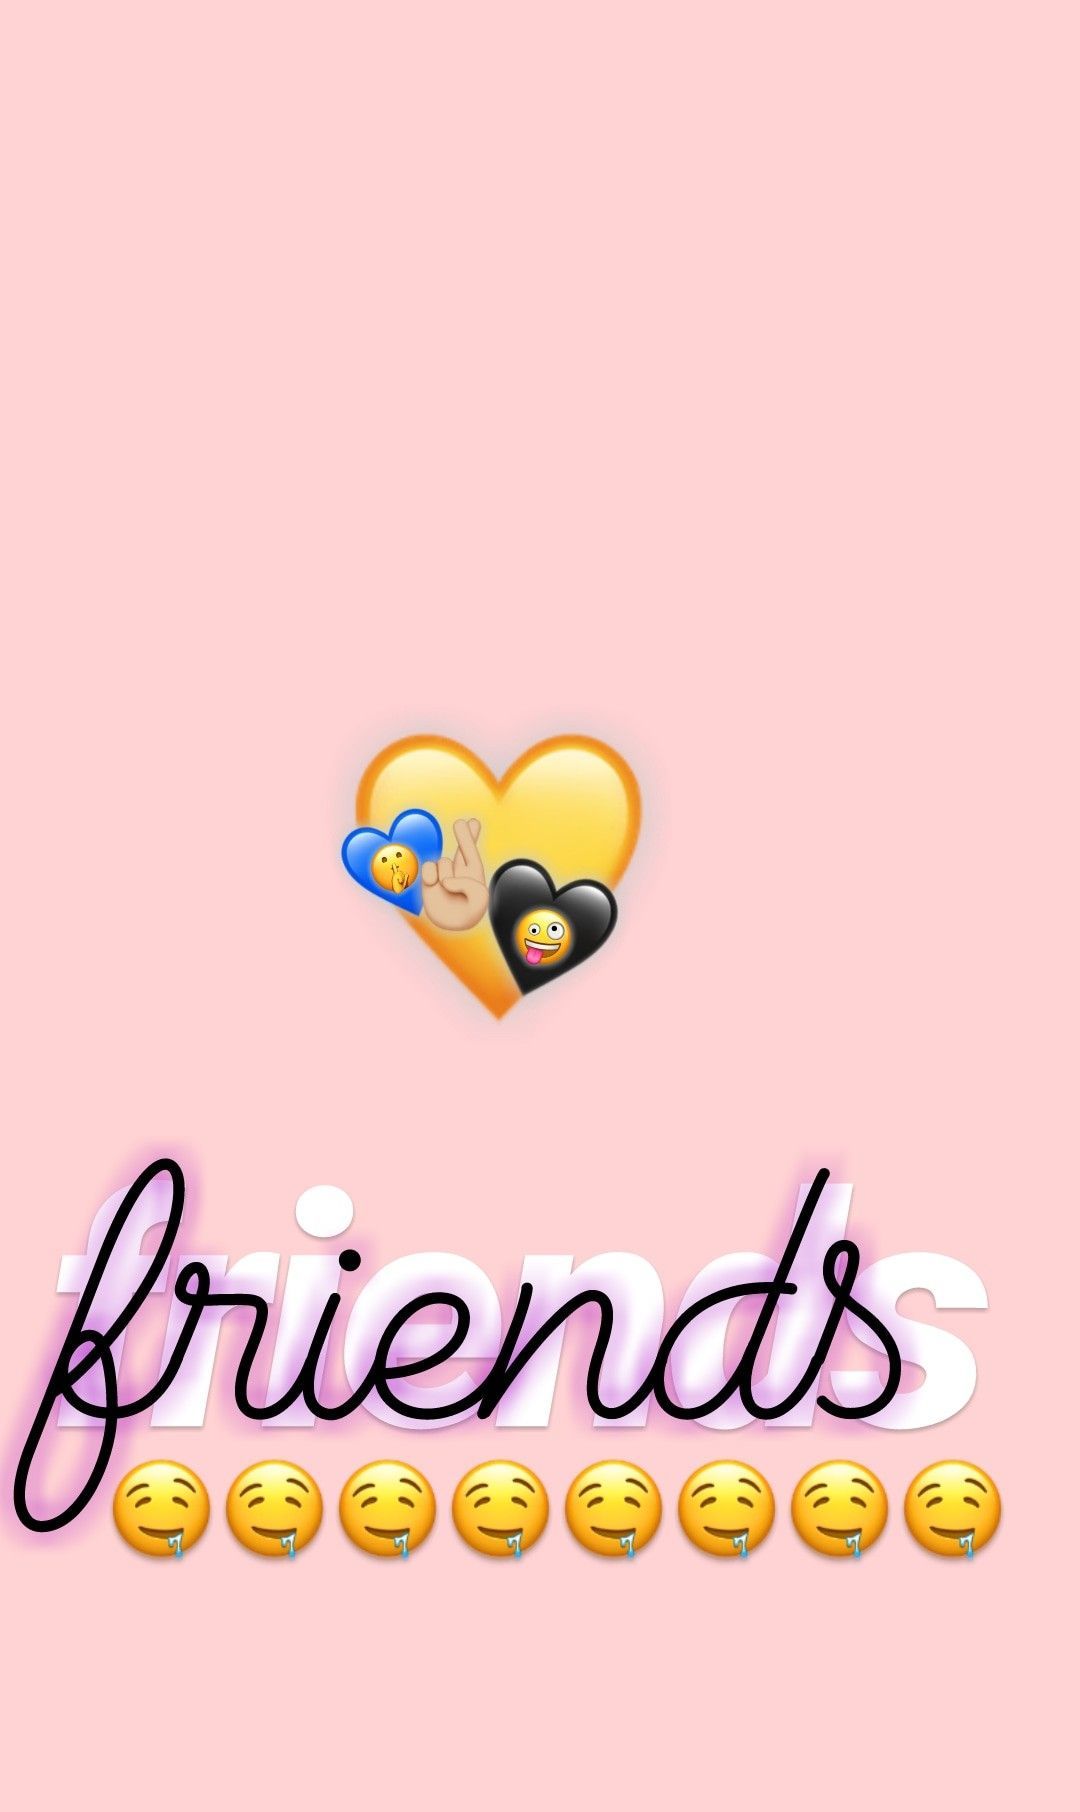 Instagram. Emoji wallpaper iphone, Cute emoji wallpaper, Emoji